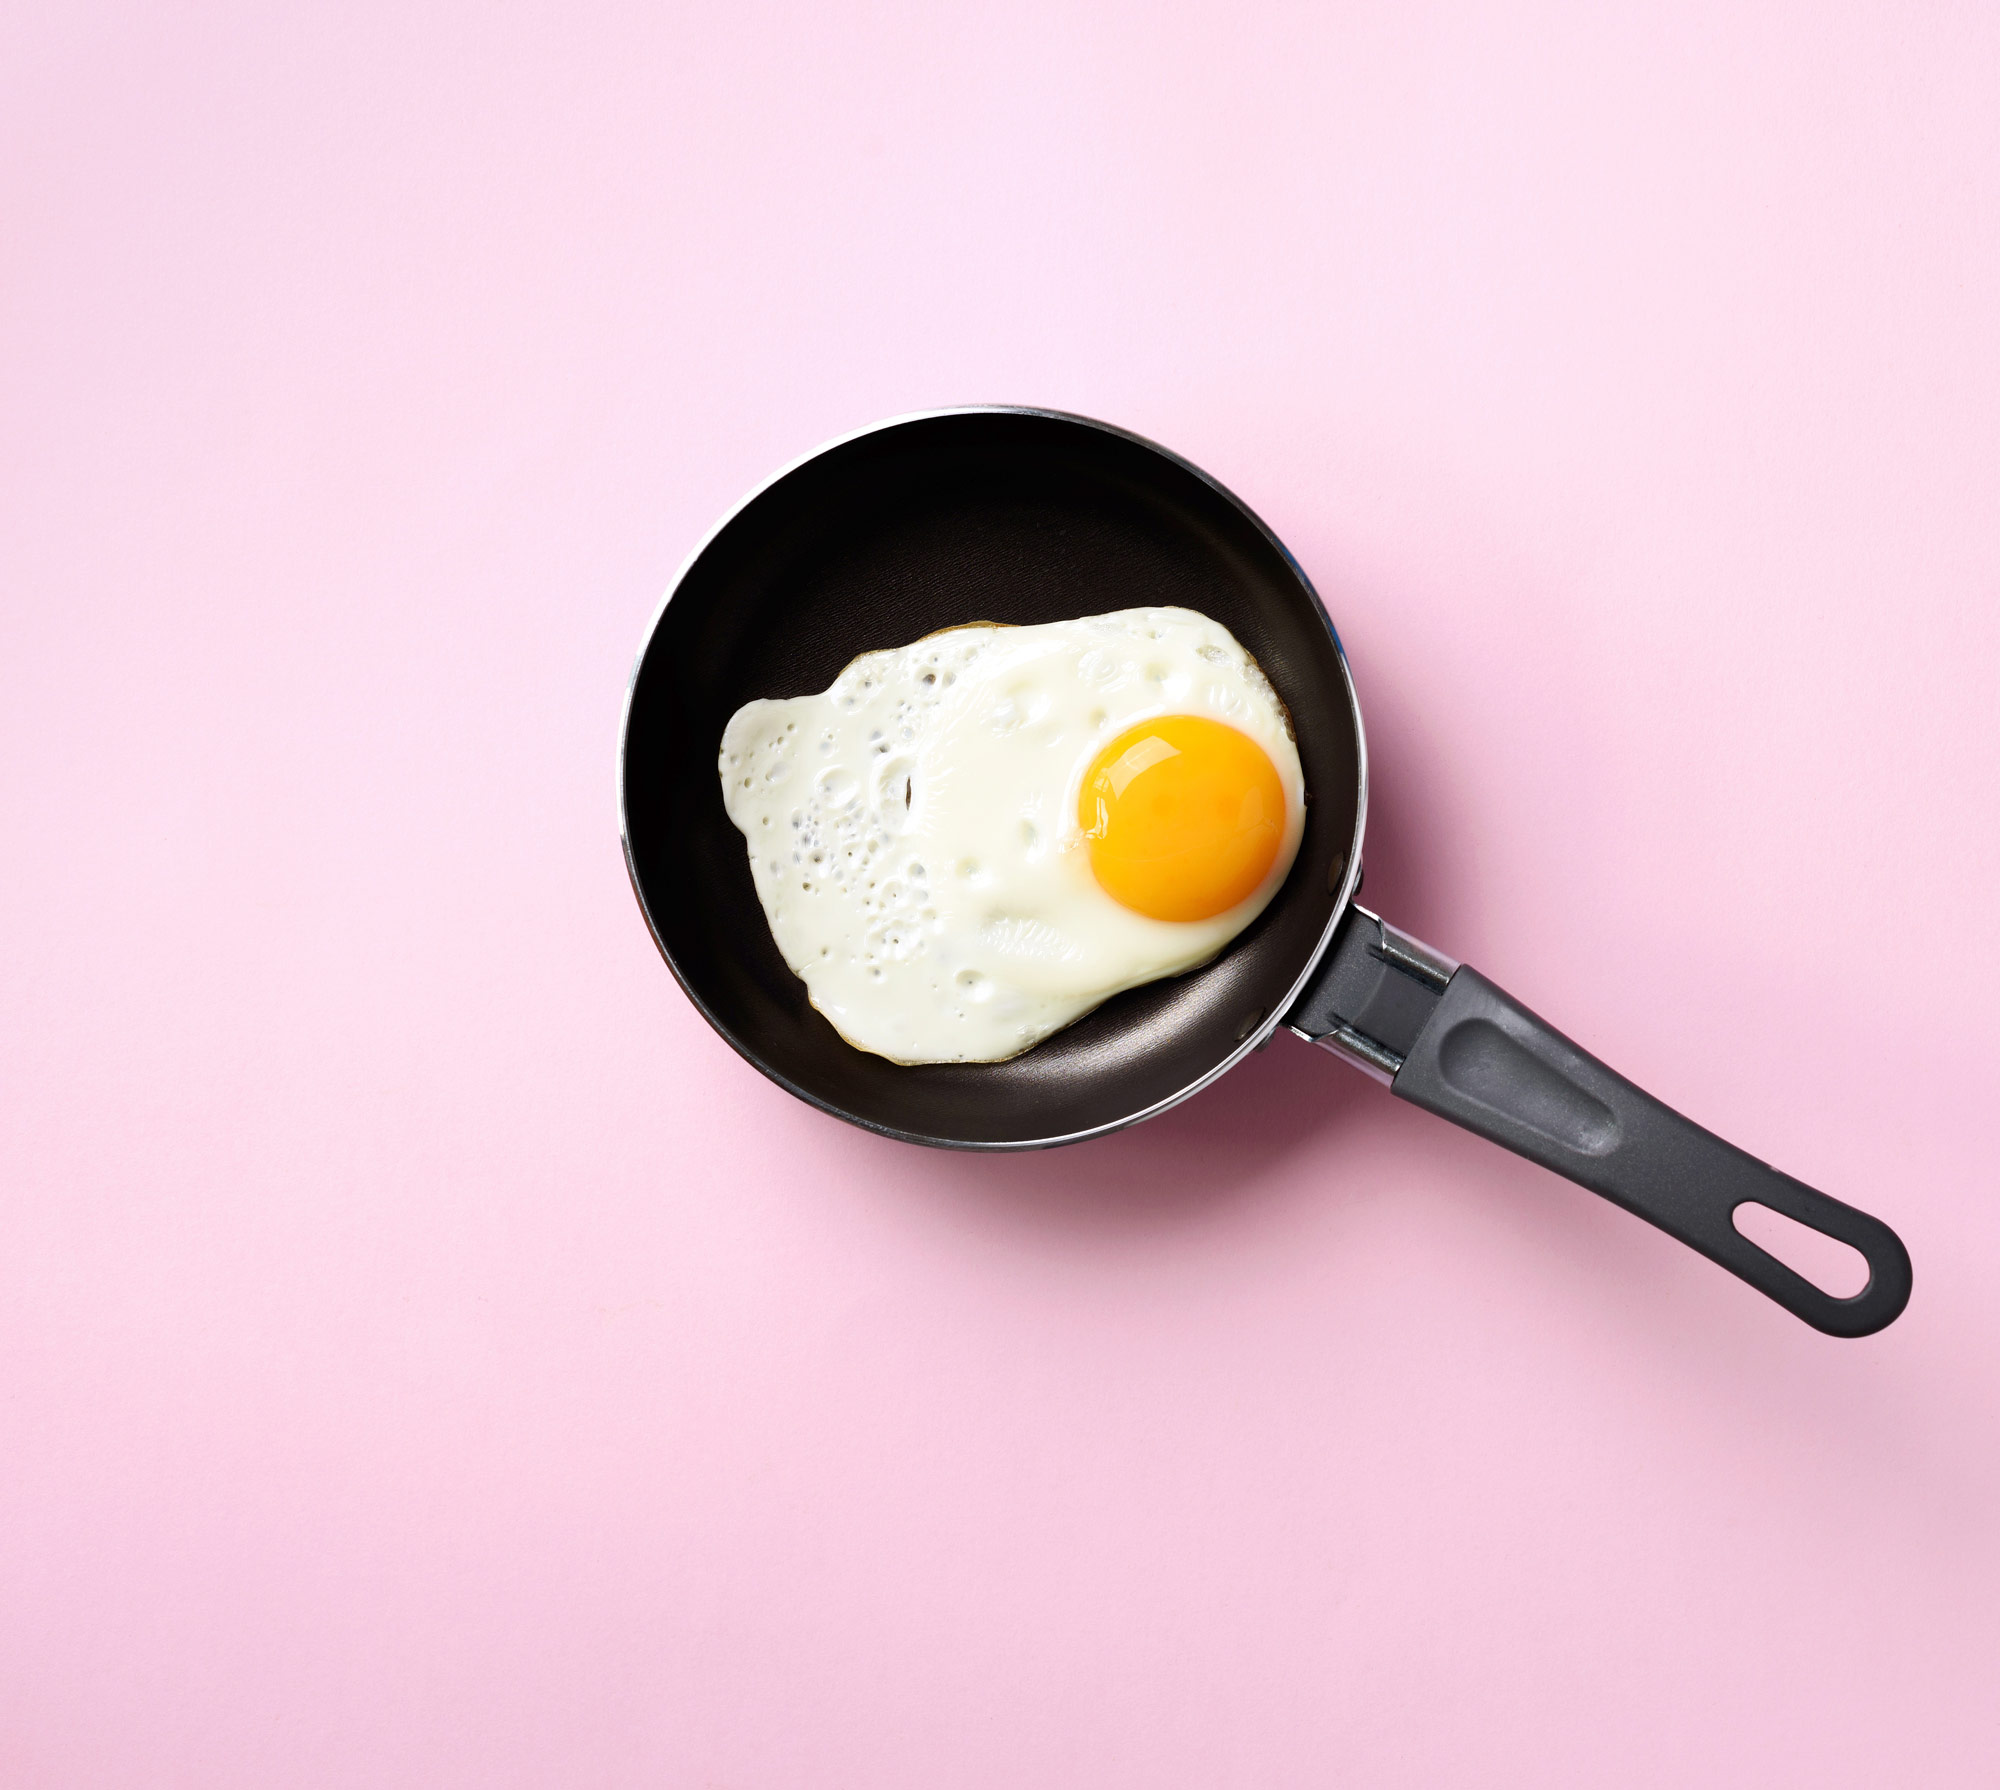 creative-food-concept-with-fried-egg-on-pan-over-p-2021-09-01-16-17-54-utc